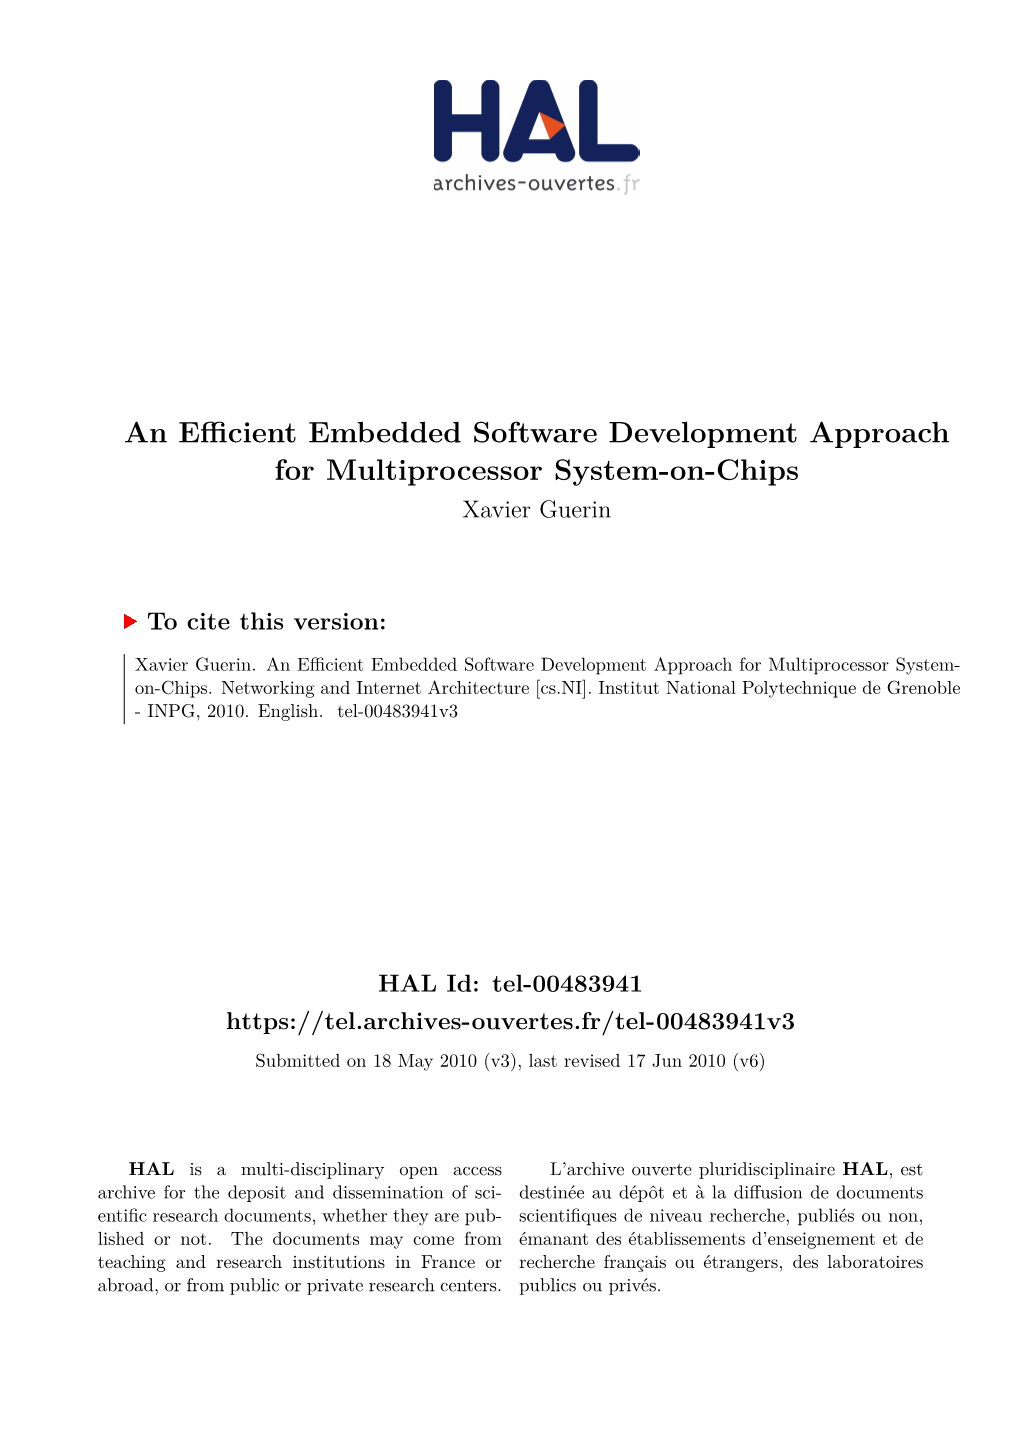 An Efficient Embedded Software Development Approach For